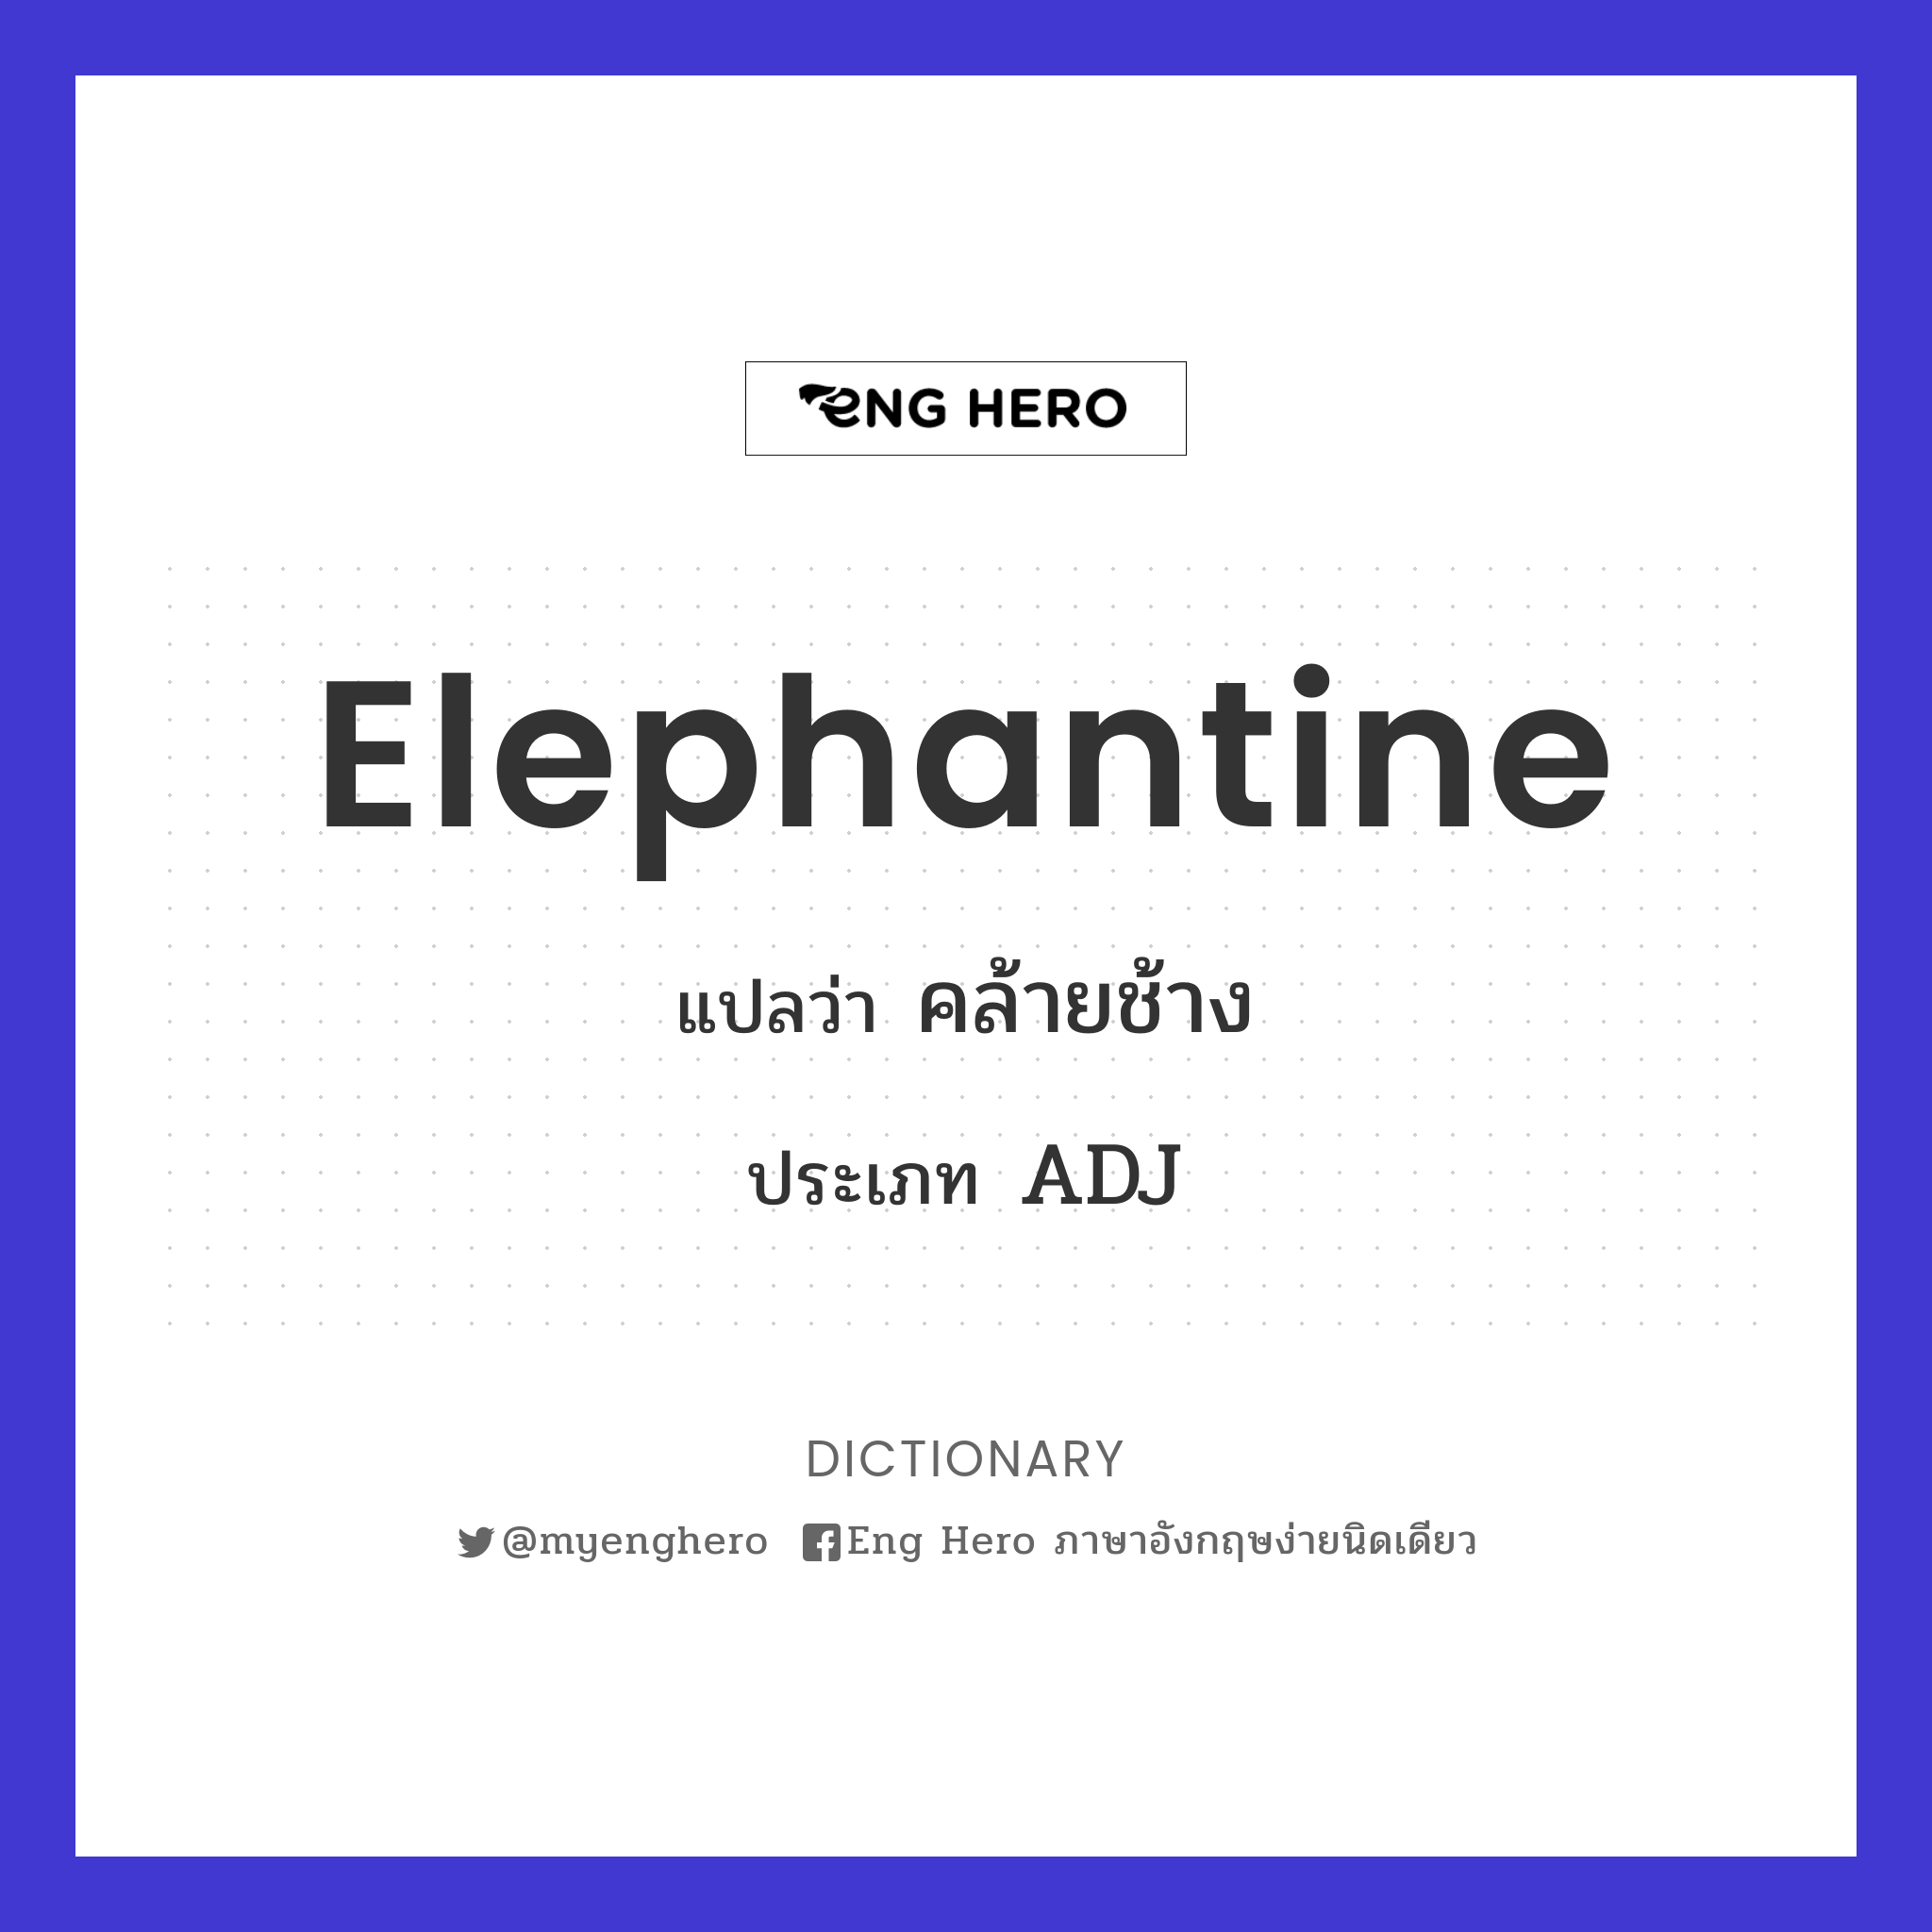 elephantine